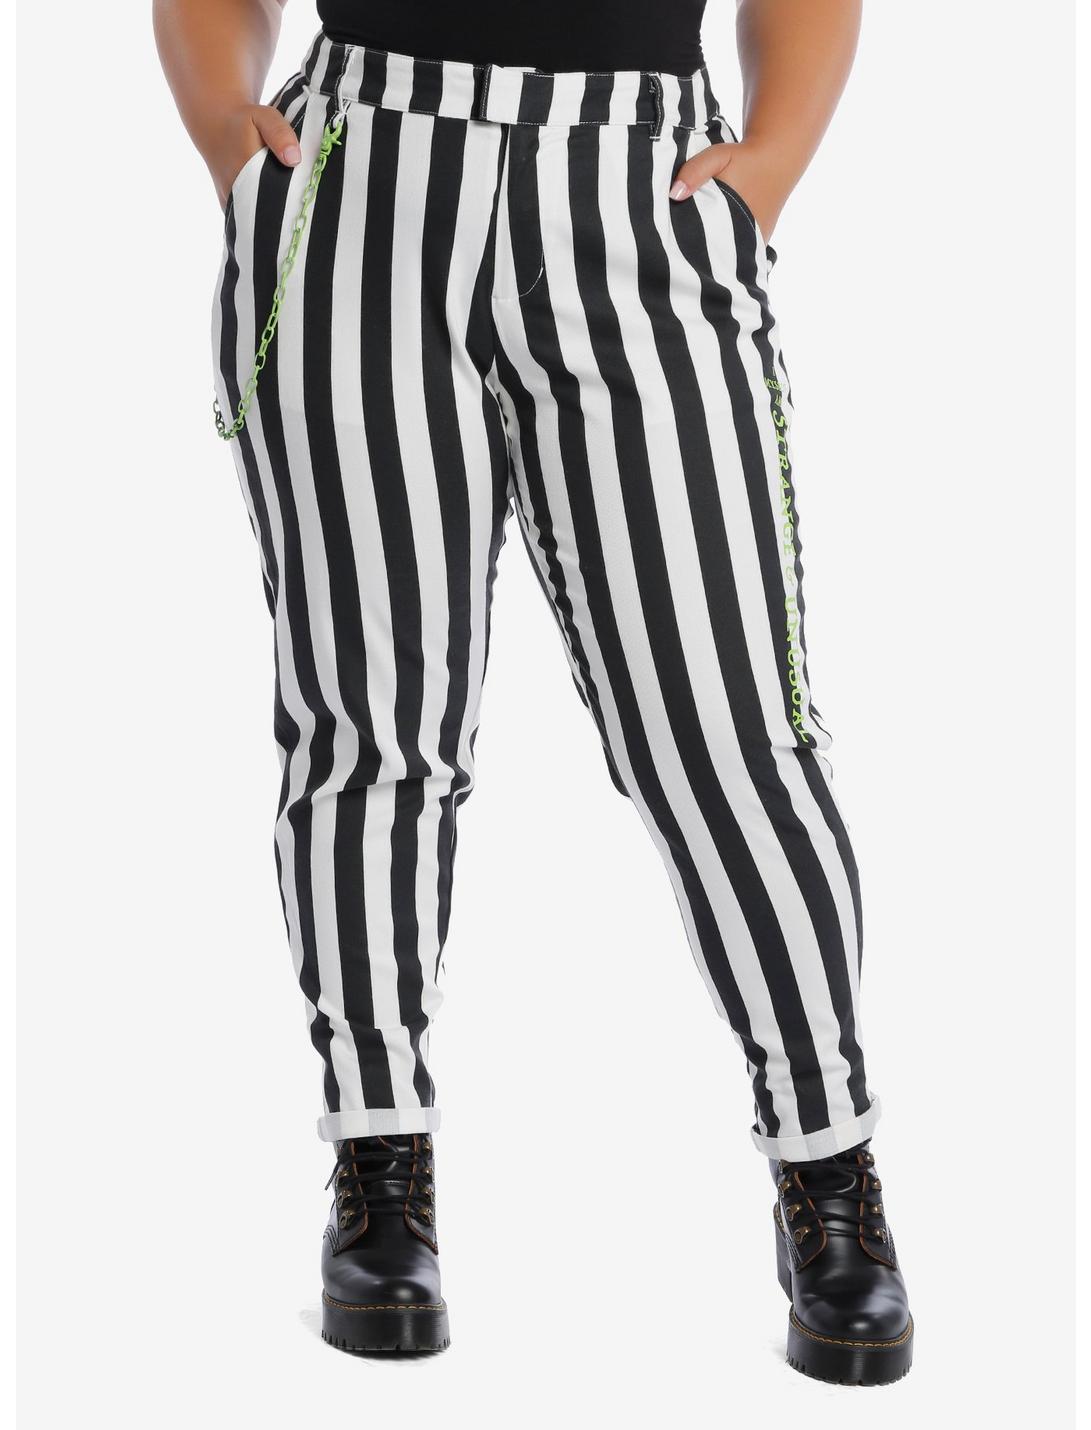 Beetlejuice Black & White Stripe Chain Pants Plus Size